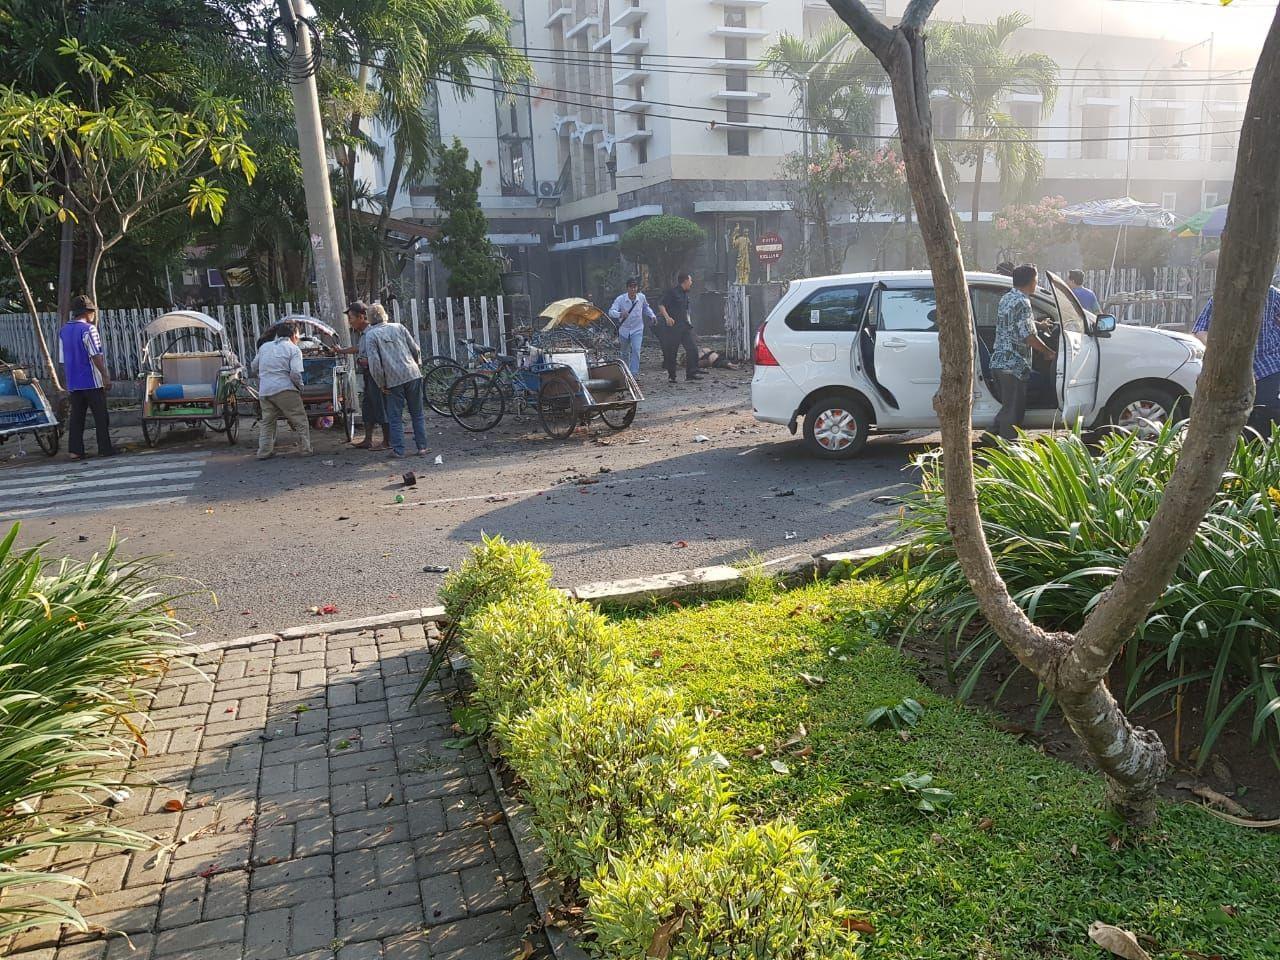 Pasca Bom Surabaya, Fahira Idris Prihatin Media Sosial Jadi Ajang Saling Hujat